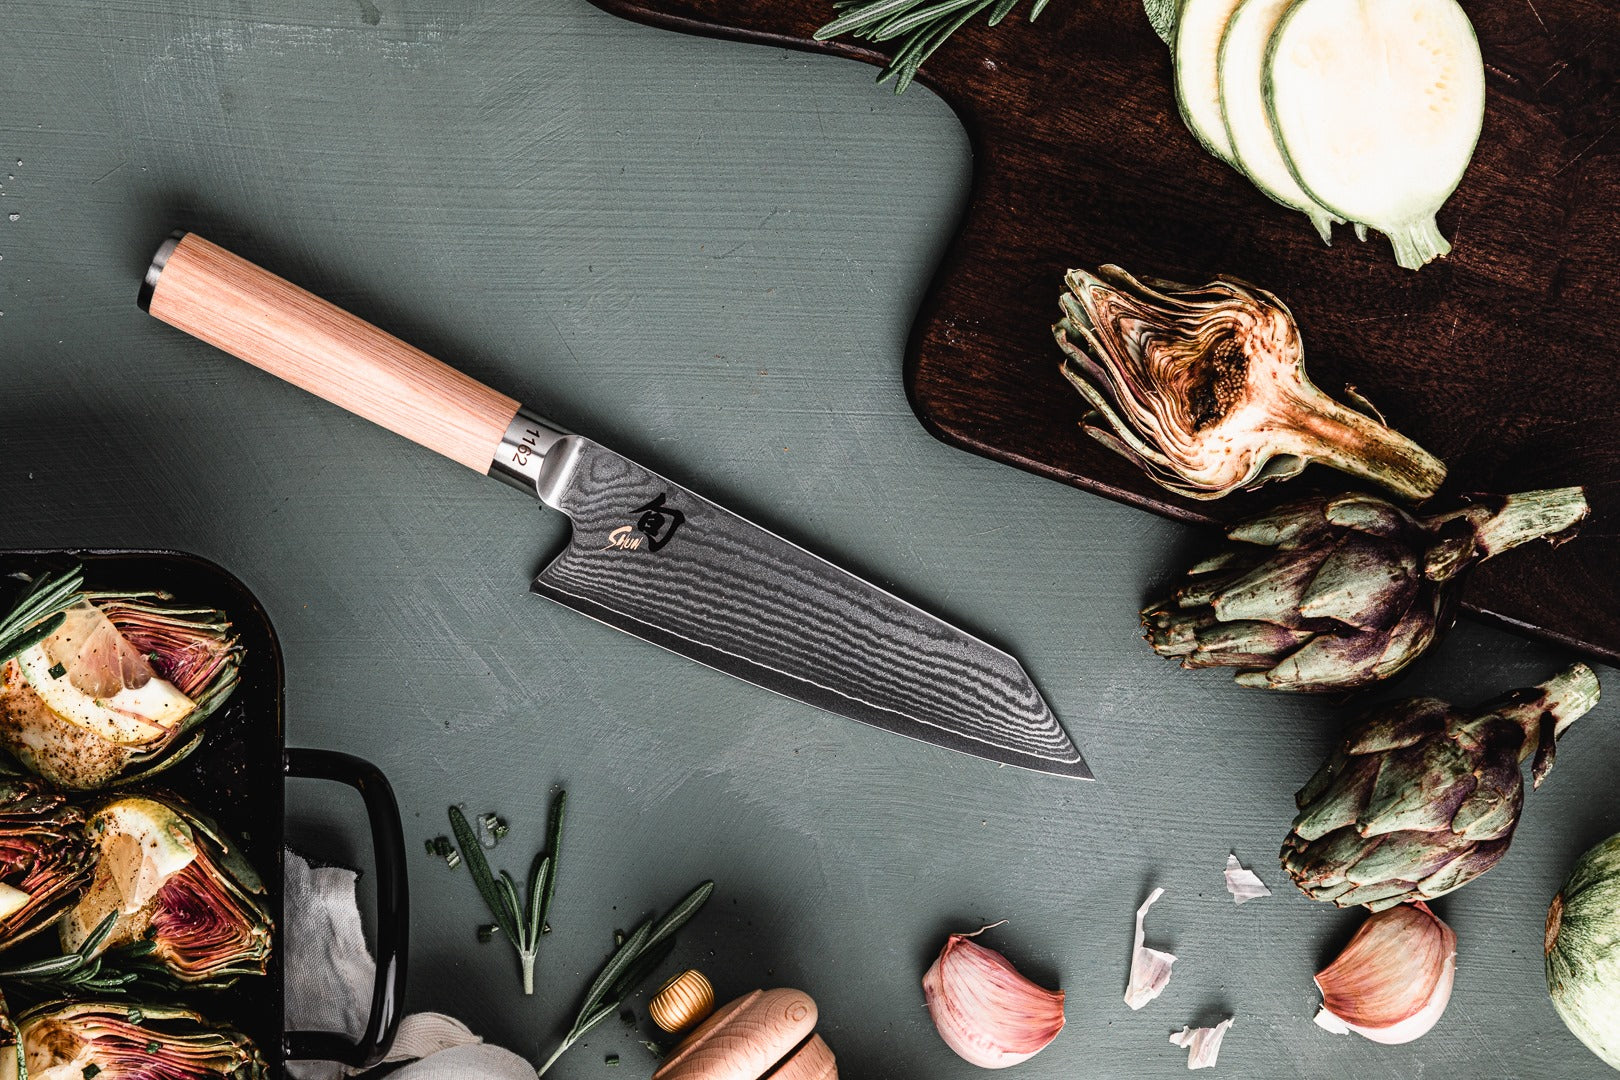 High-Performance Chef's Knife, Shun Classic Blonde